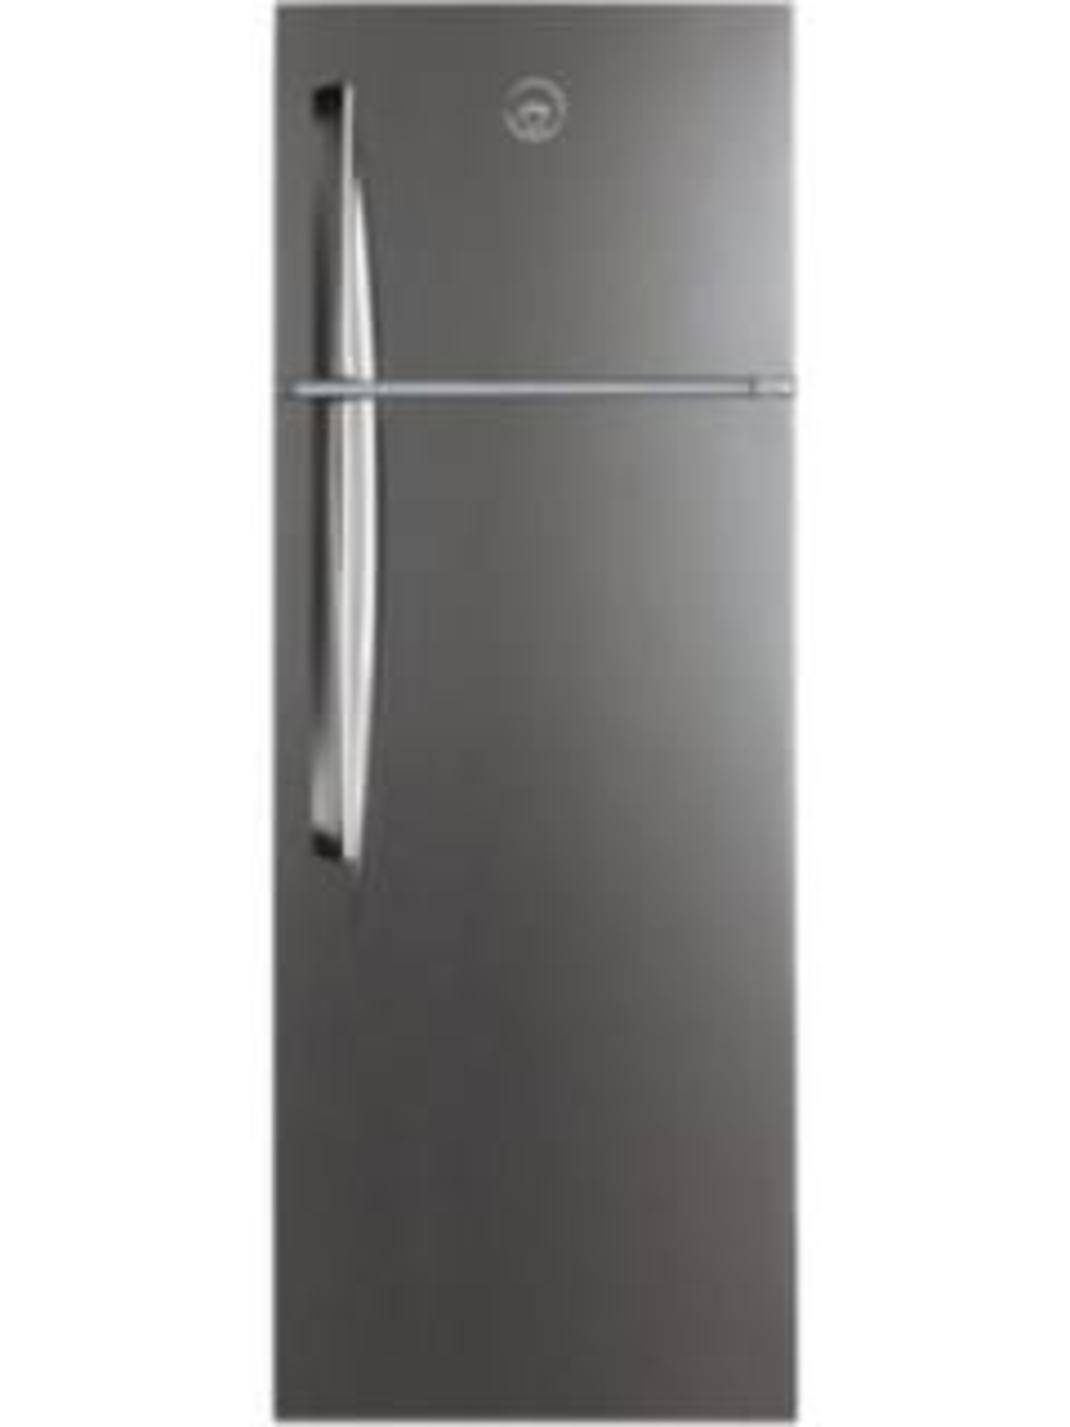 Compare Godrej RT EON 241 PD 3.4 241 Ltr Double Door Refrigerator vs